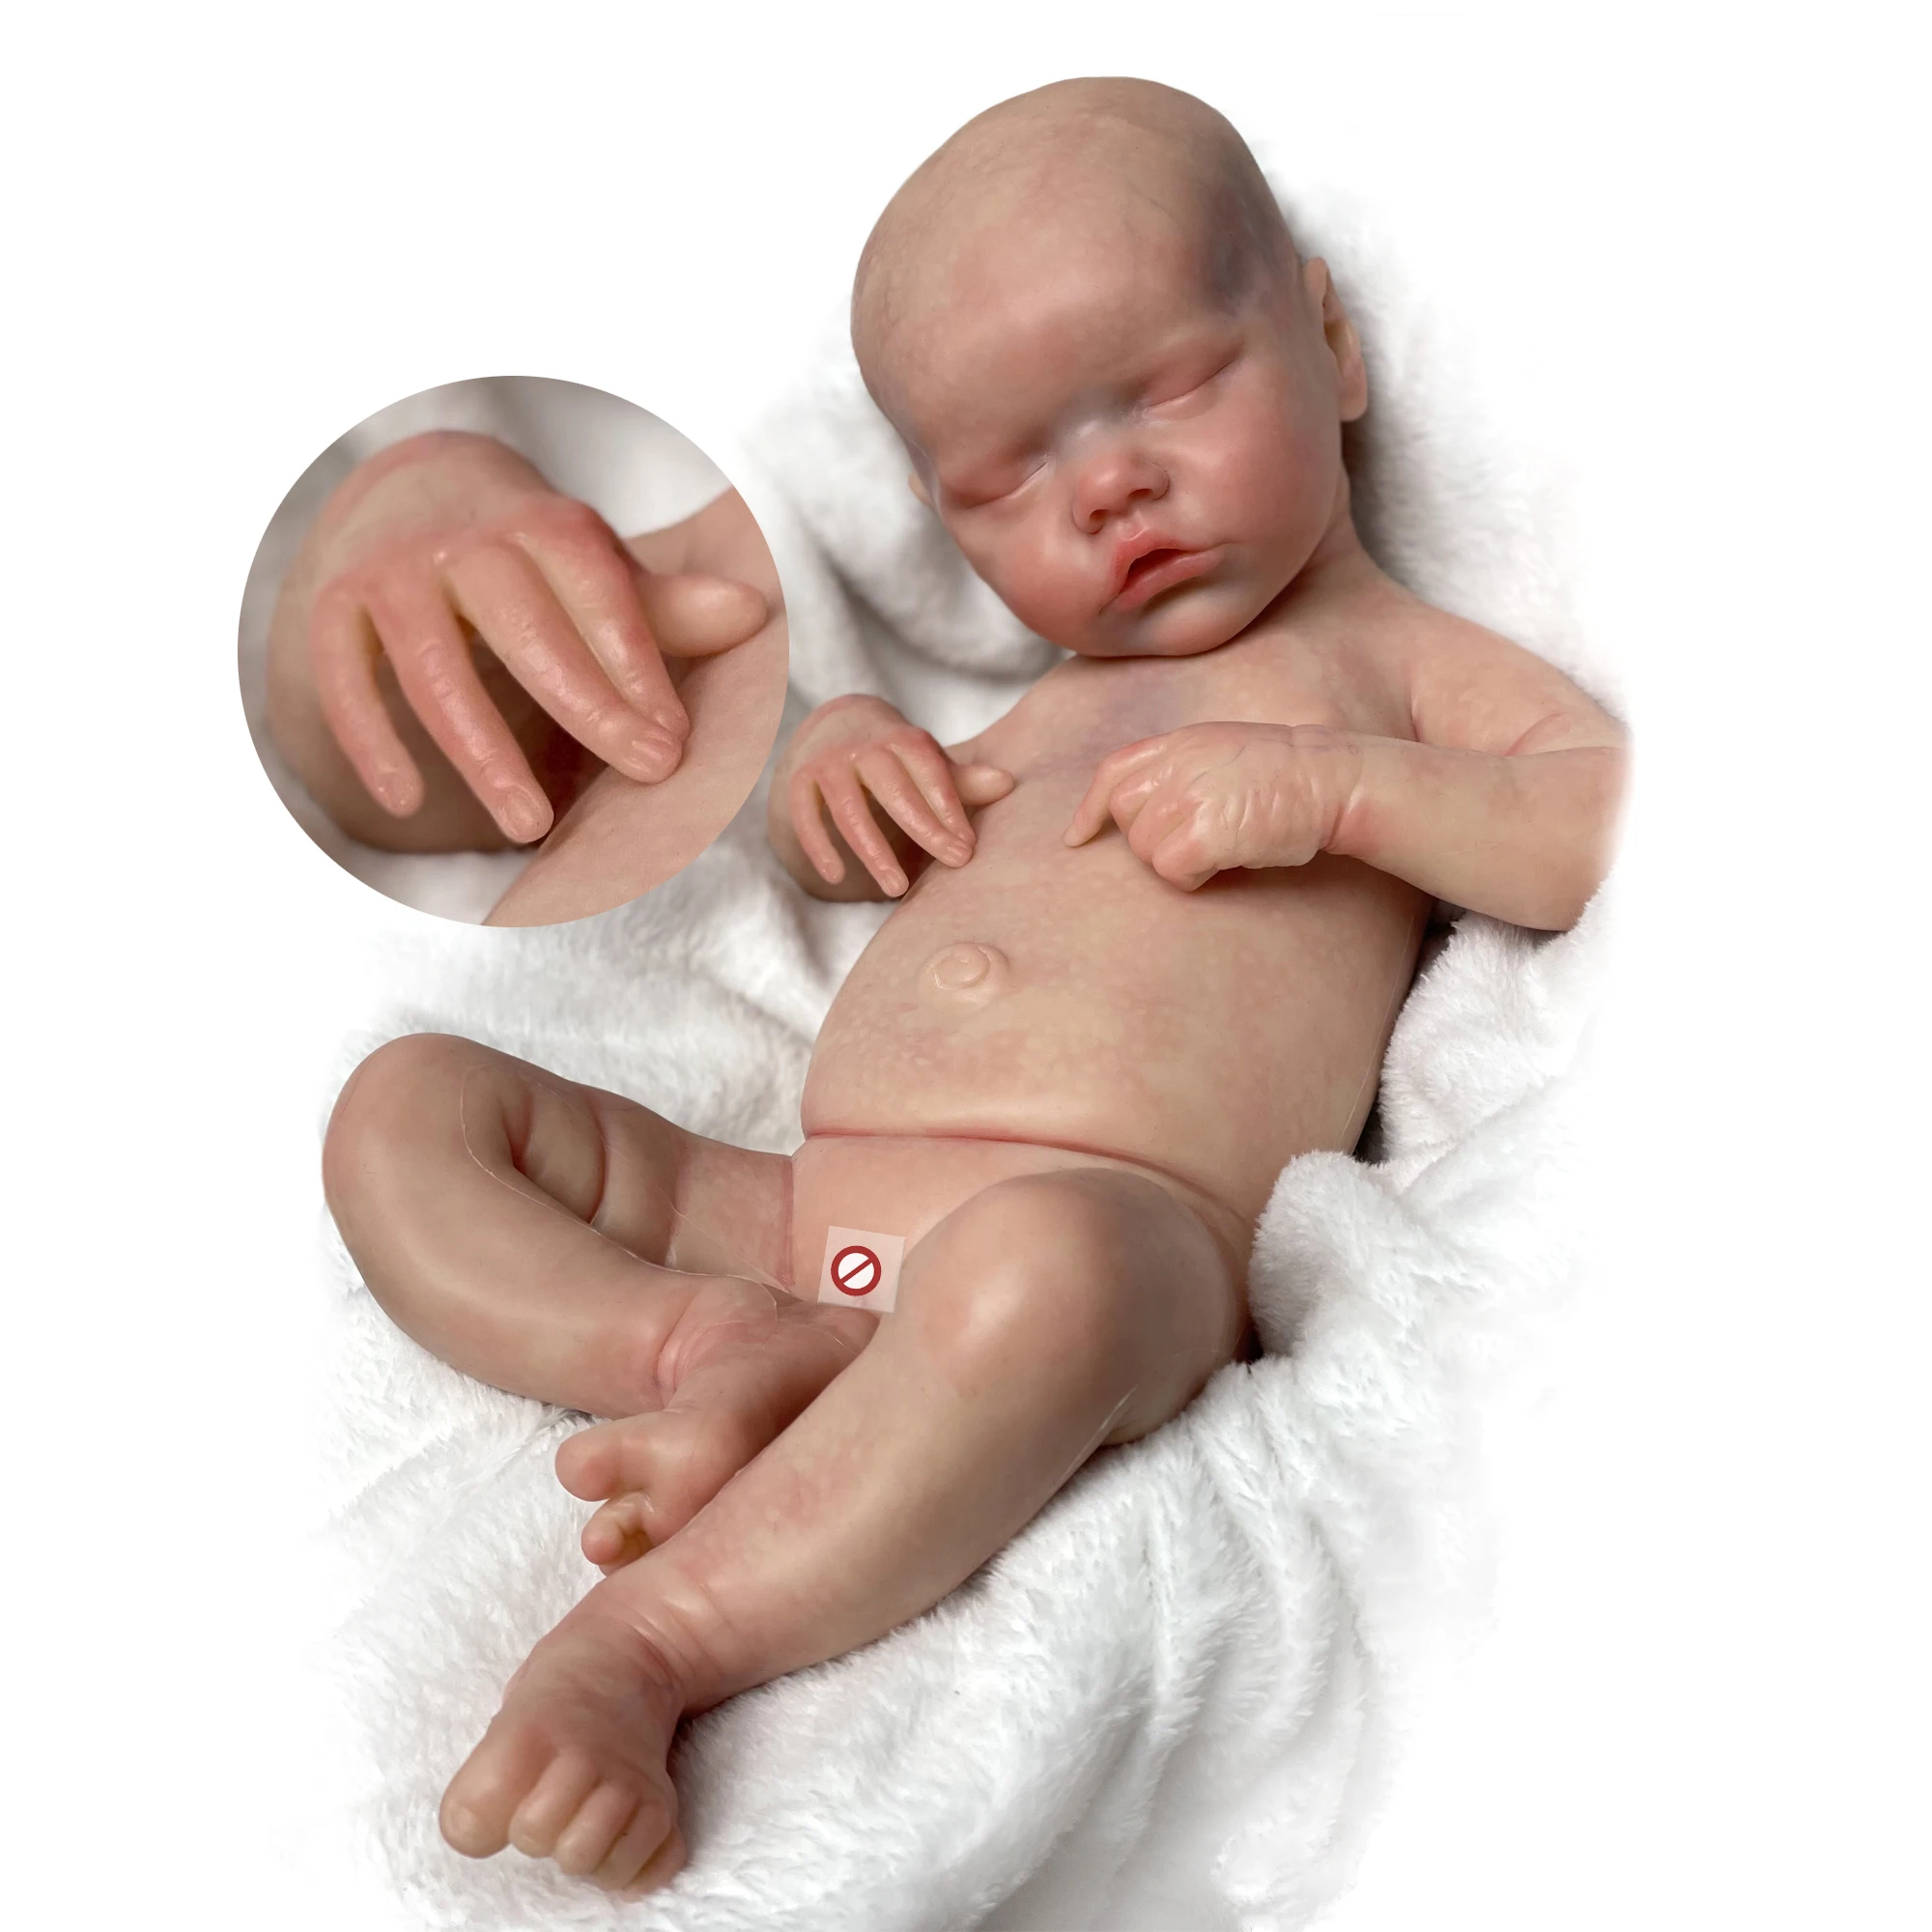 Gustave 11 Inch 2Pcs Mini Black Reborn Baby Doll Full Body Silicone Vinyl  Newborn Doll Lifelike Black Twins Baby For 3+ Boy & Girl